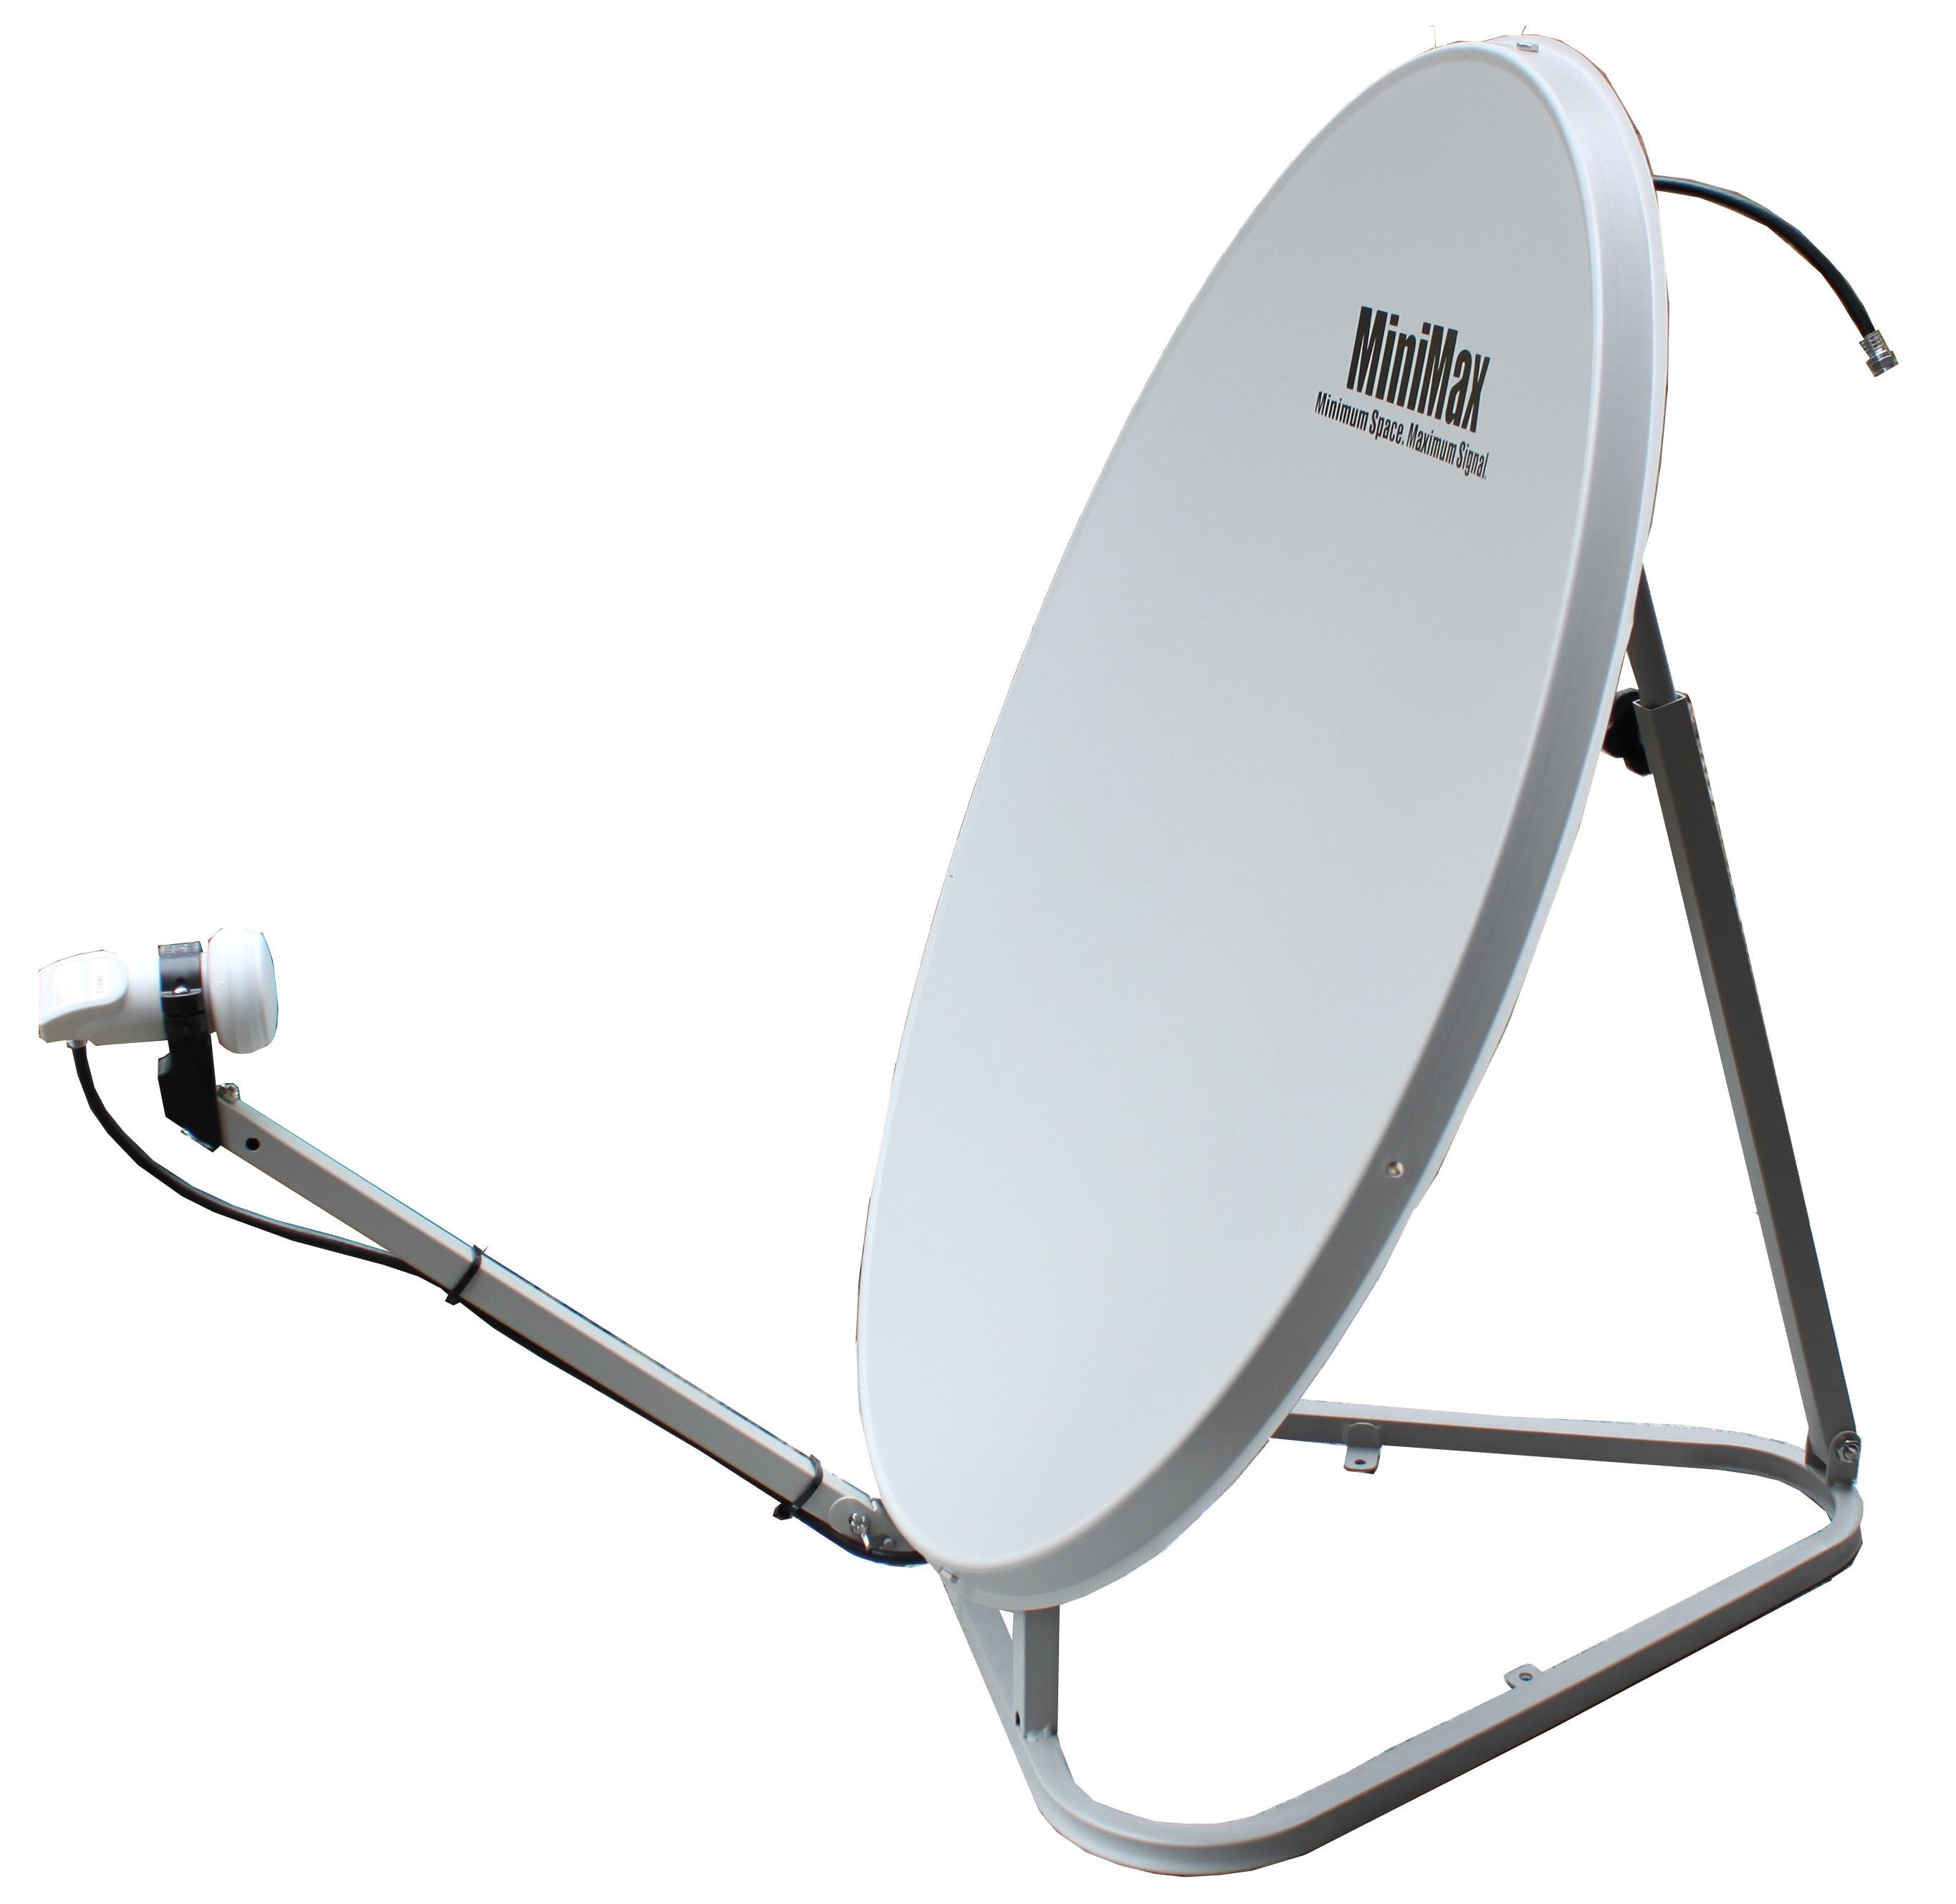 Satellite dish. Спутниковая антенна Lit 60. Спутниковая антенна 80 см. Спутниковая параболическая антенна. Спутниковая антенна ТВТЕС.